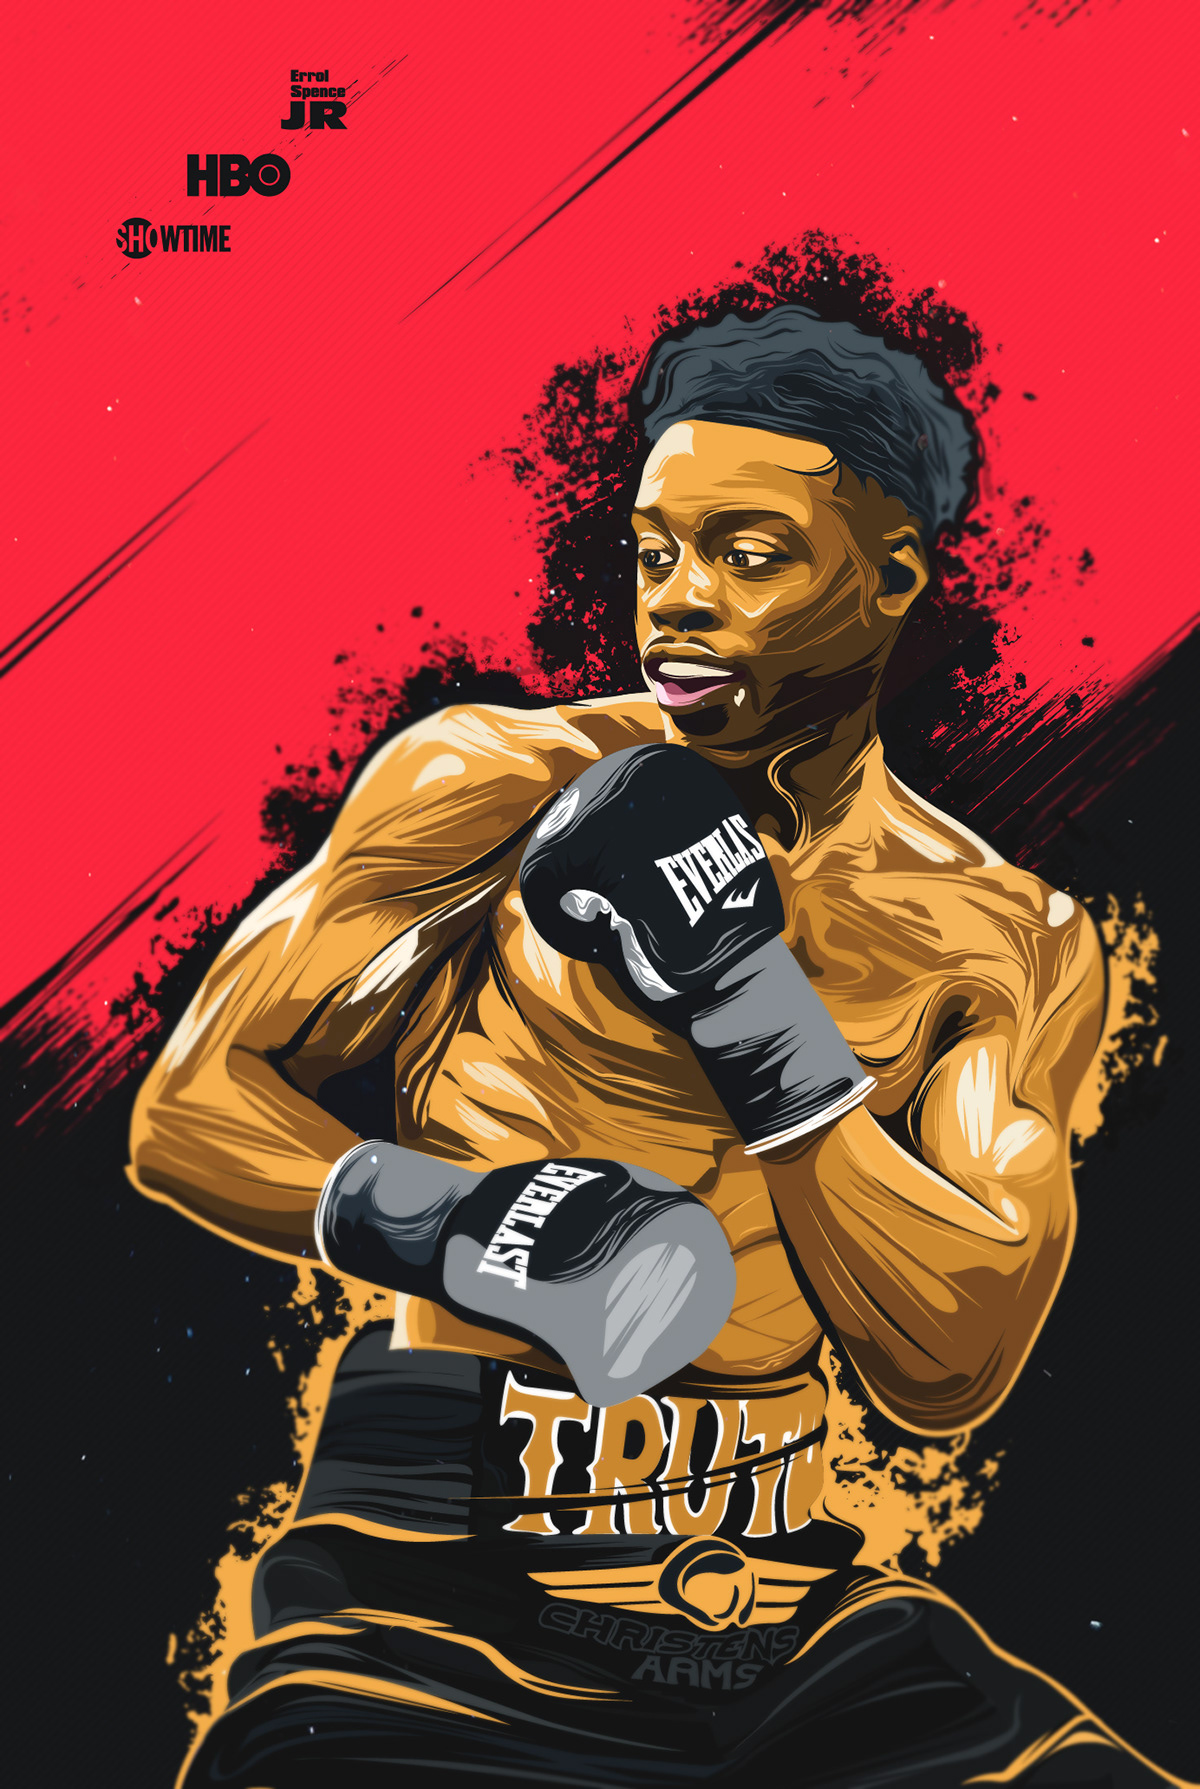 Boxing digitalart Everlast fanart Fighter hbo thetruth warrior Weltorweight